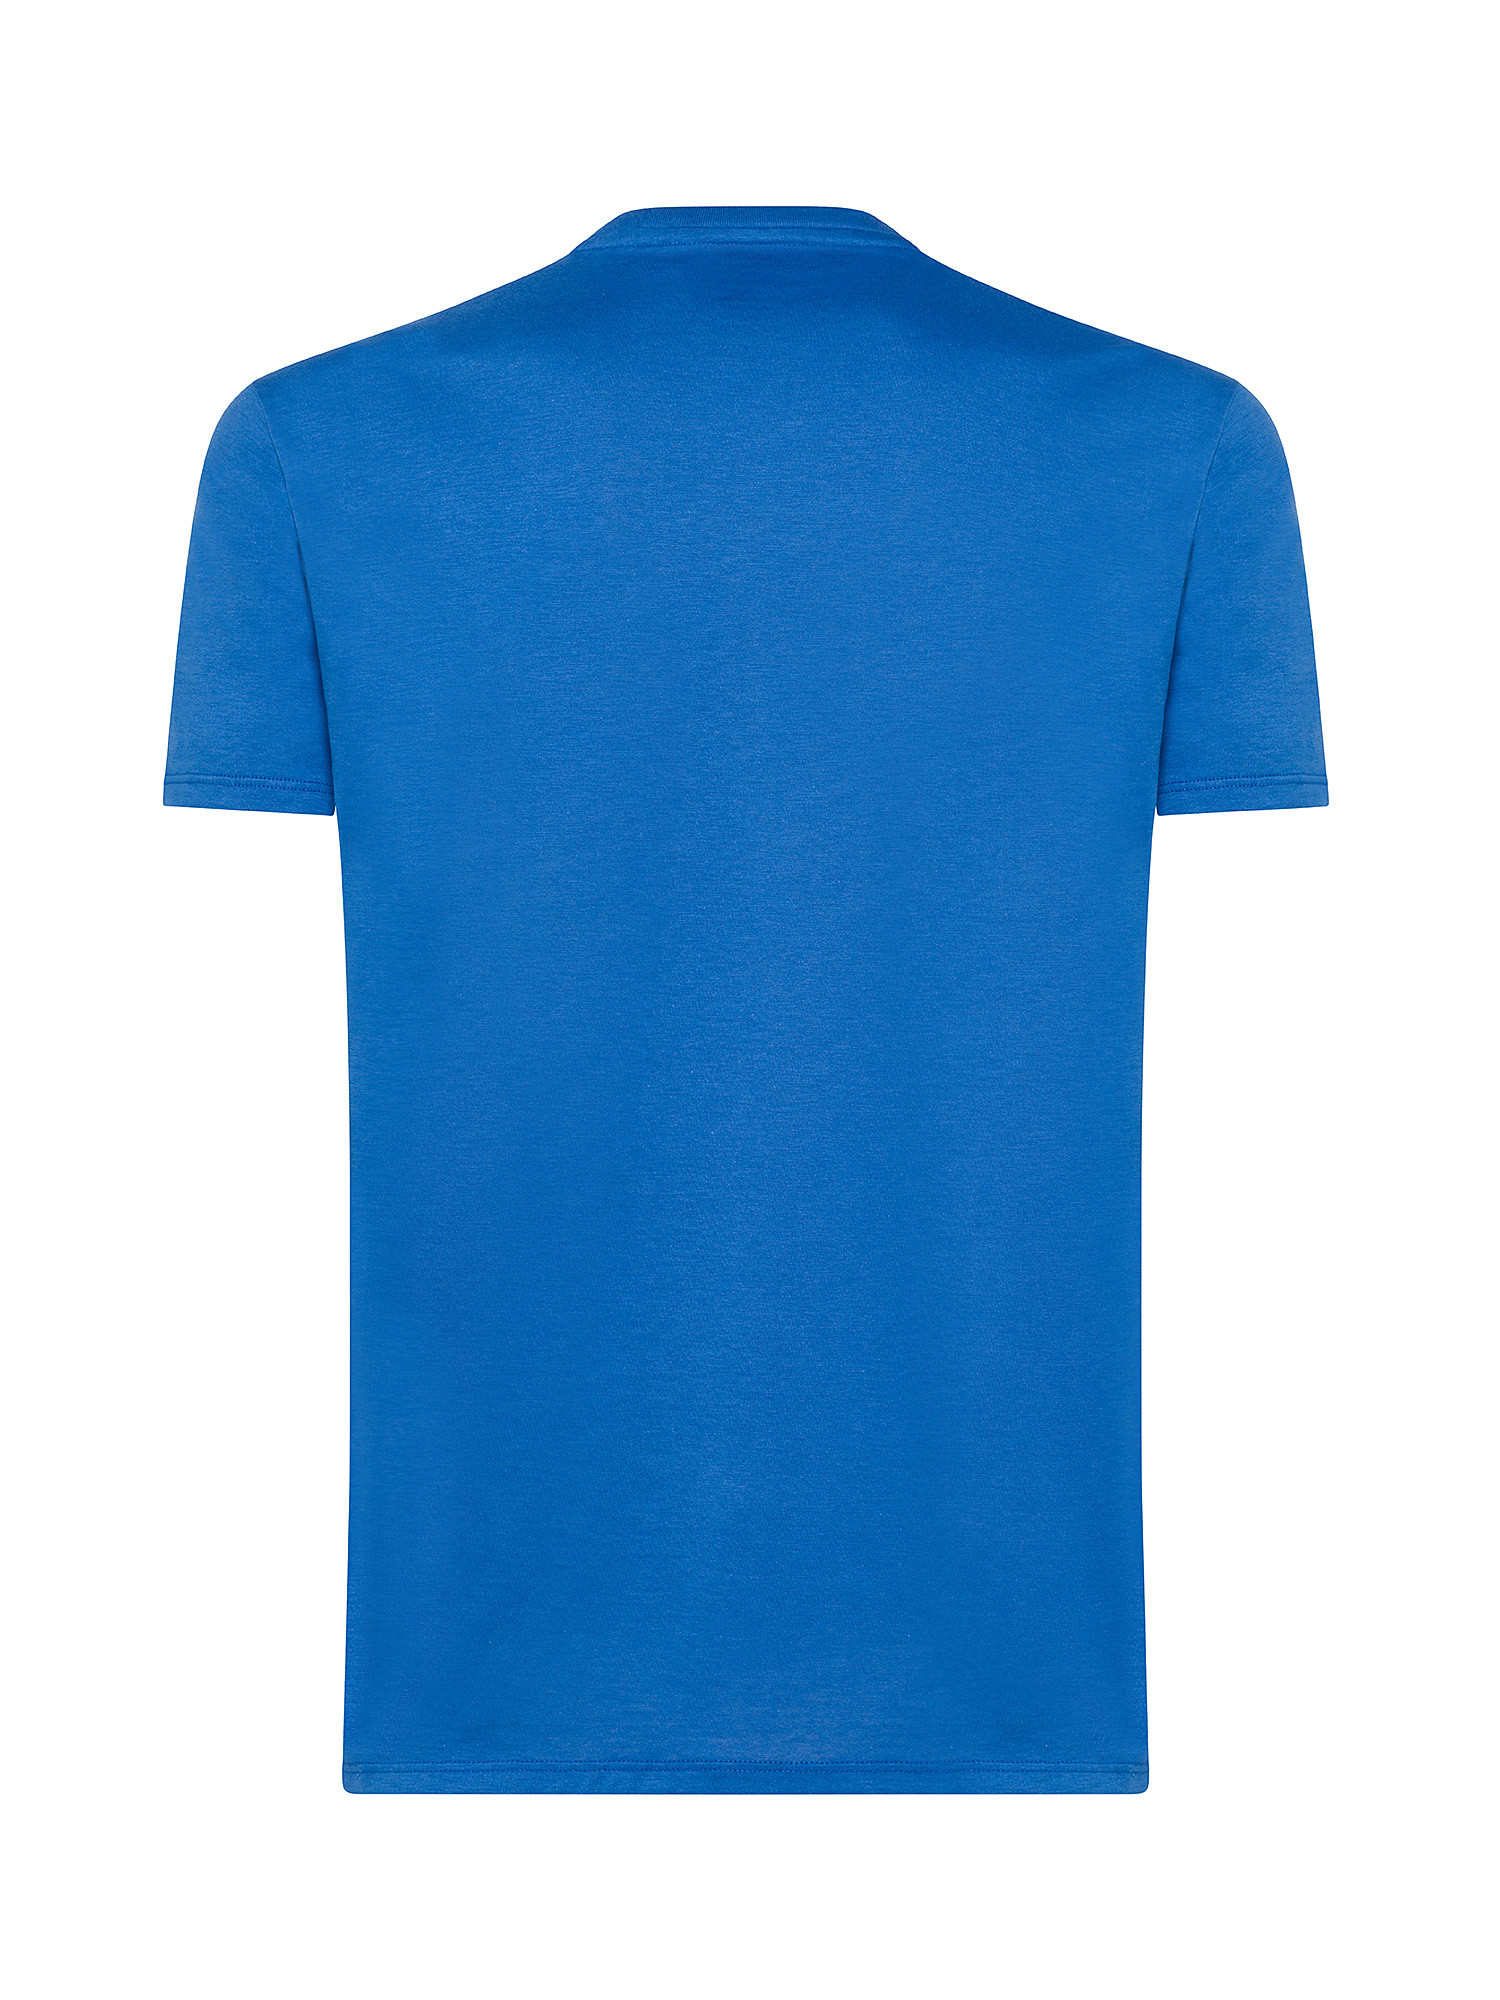 Lacoste - Pima cotton jersey crewneck T-shirt, Blue, large image number 1